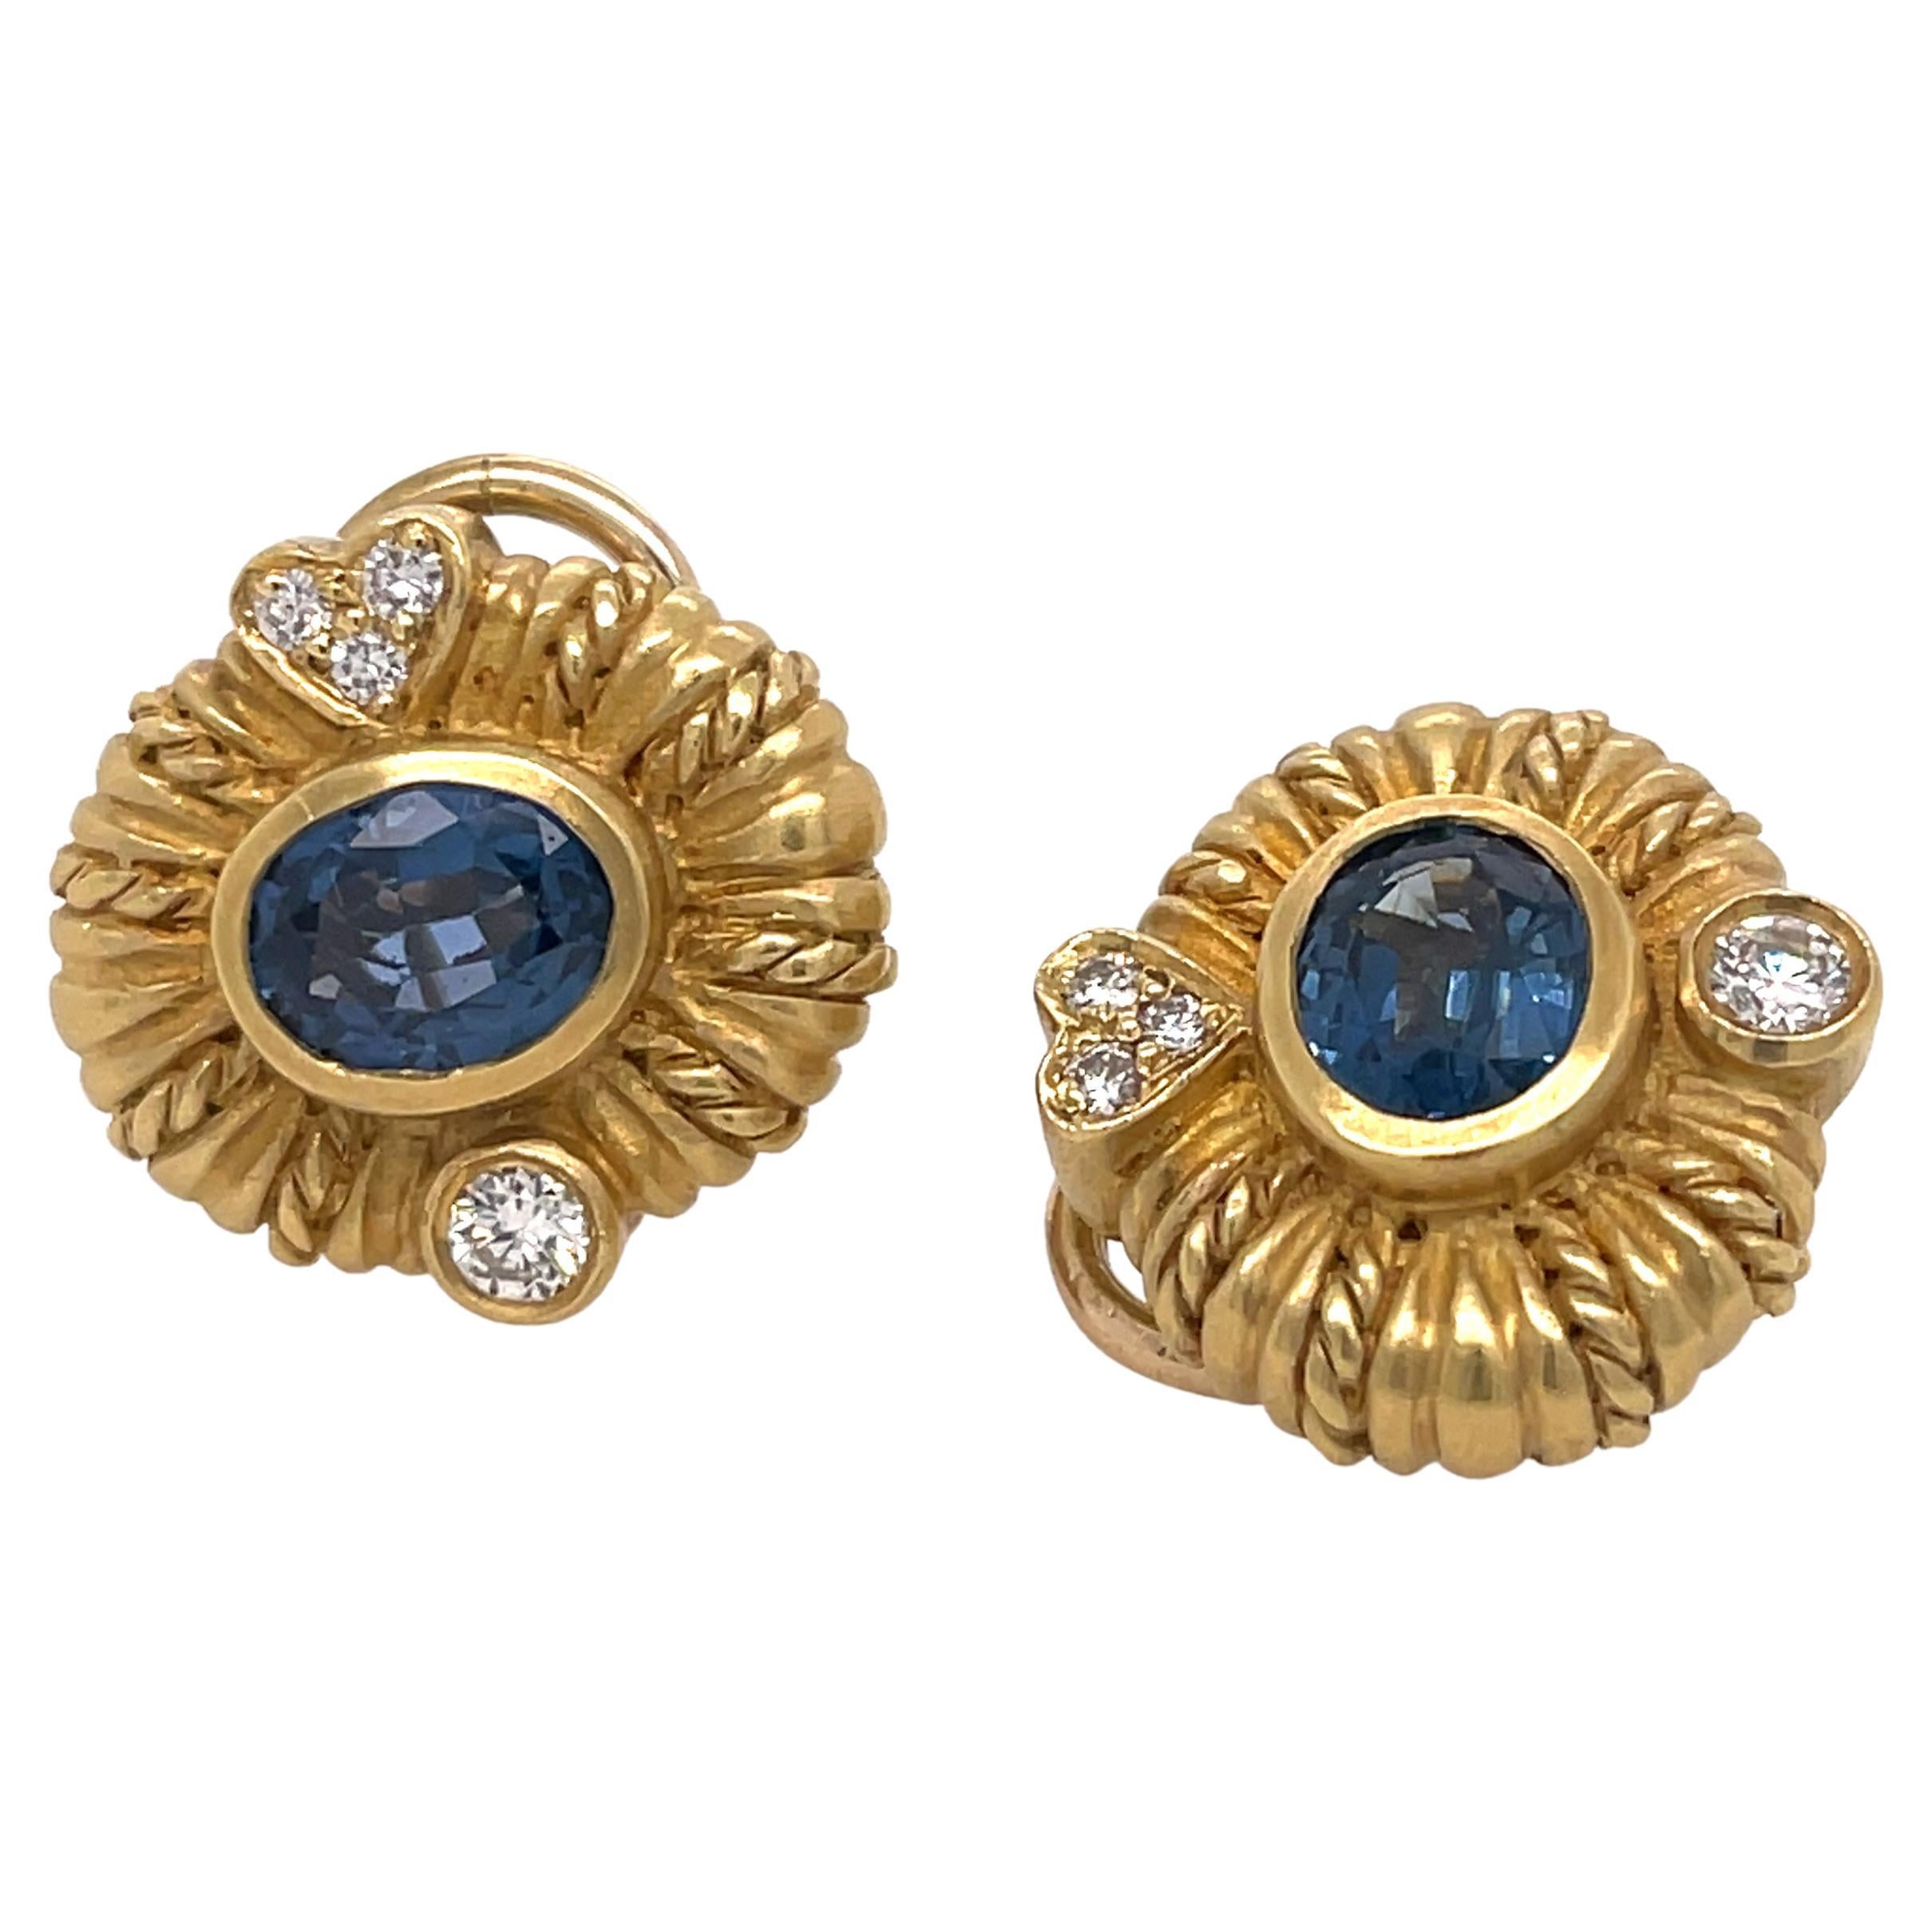 Judith Ripka Yellow Gold Sapphire and Diamond Earrings